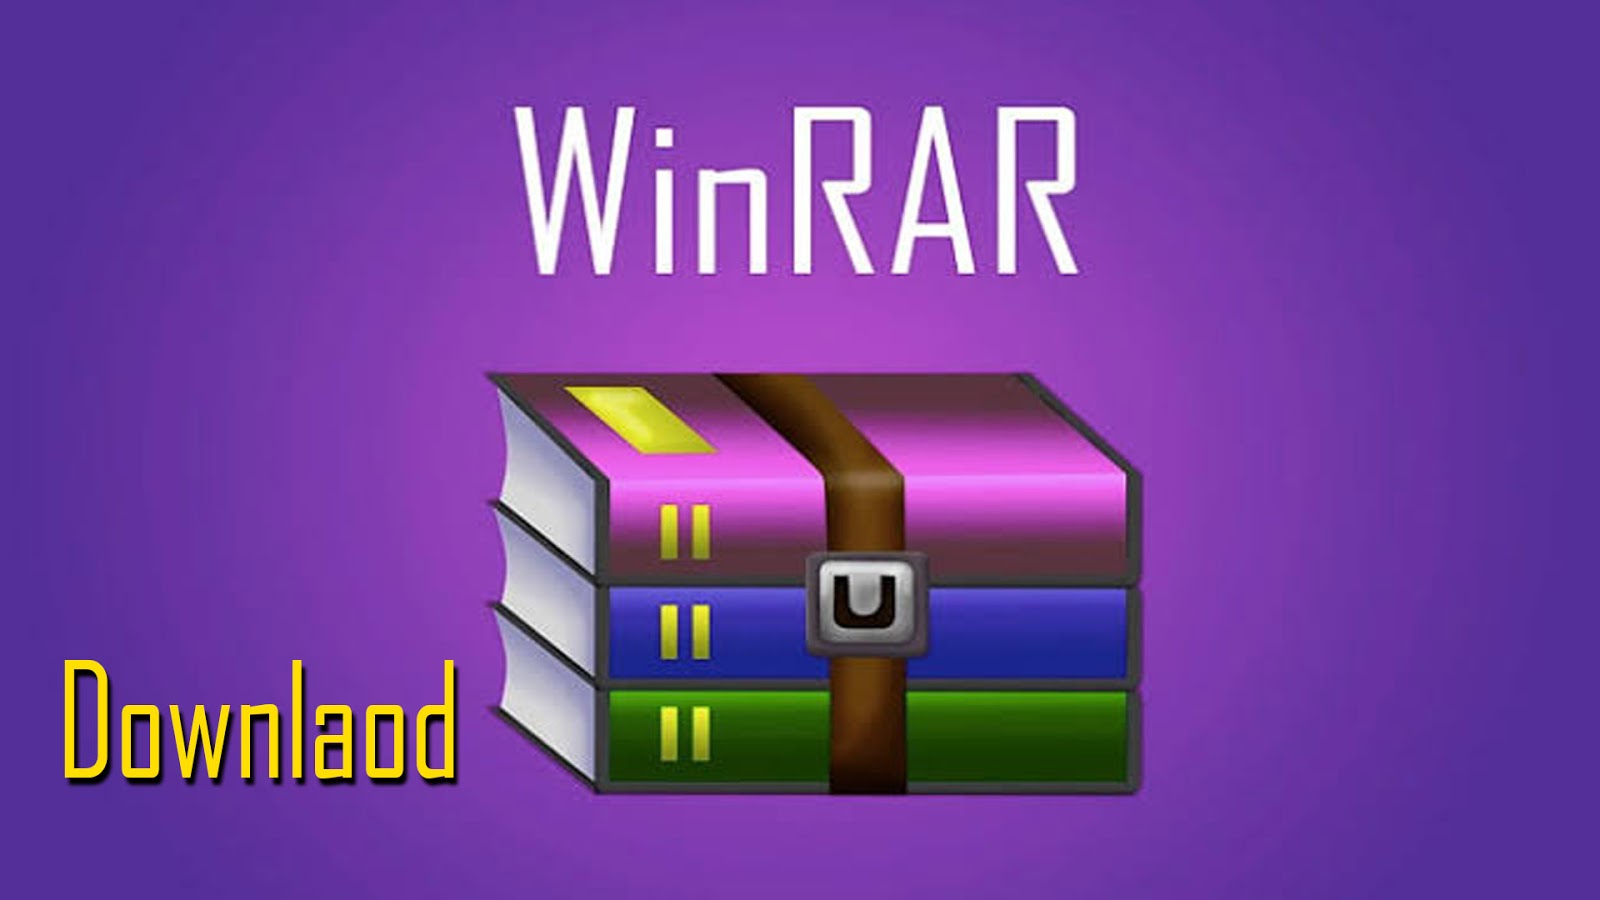 winrar free download for windows 8.1 64 bit filehippo